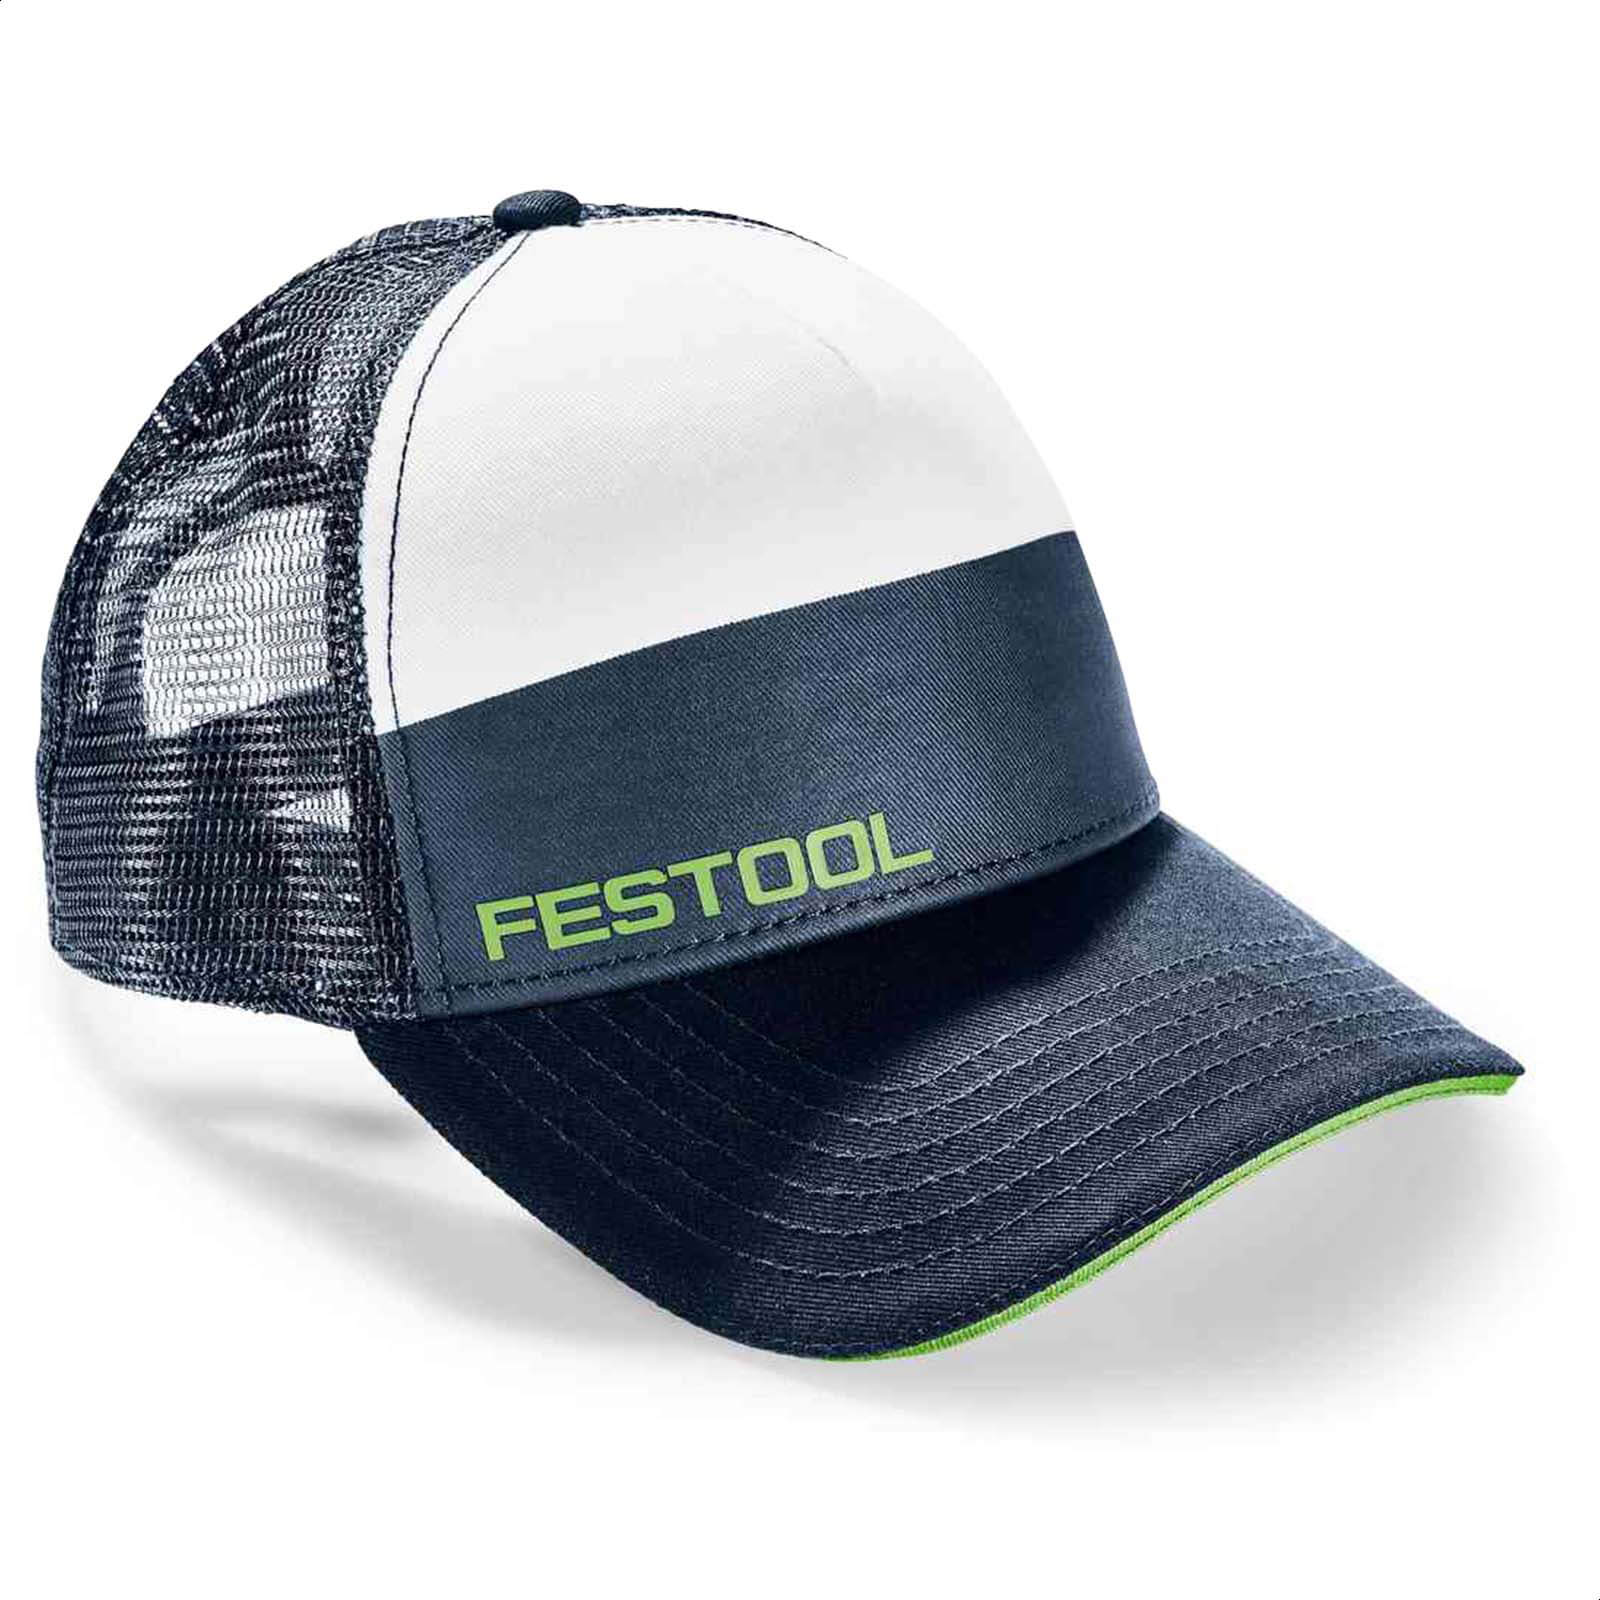 Festool Fan GC-FT1 Golf Baseball Cap